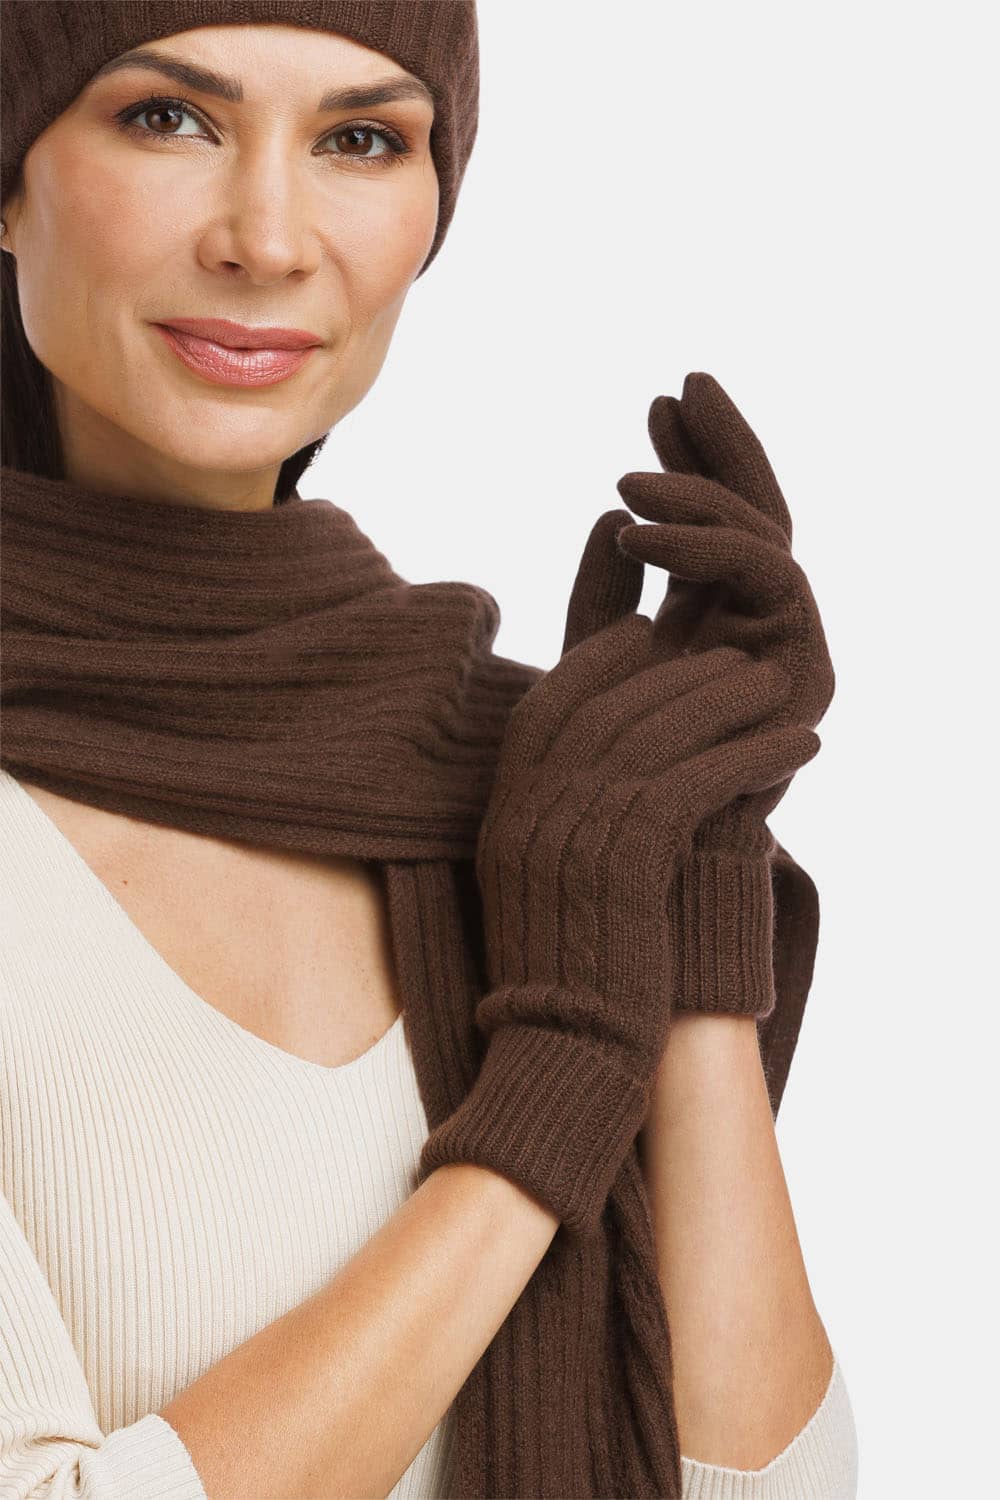 Spring Winter Microfiber Gloves Cashmere Knit Mitten High Quality